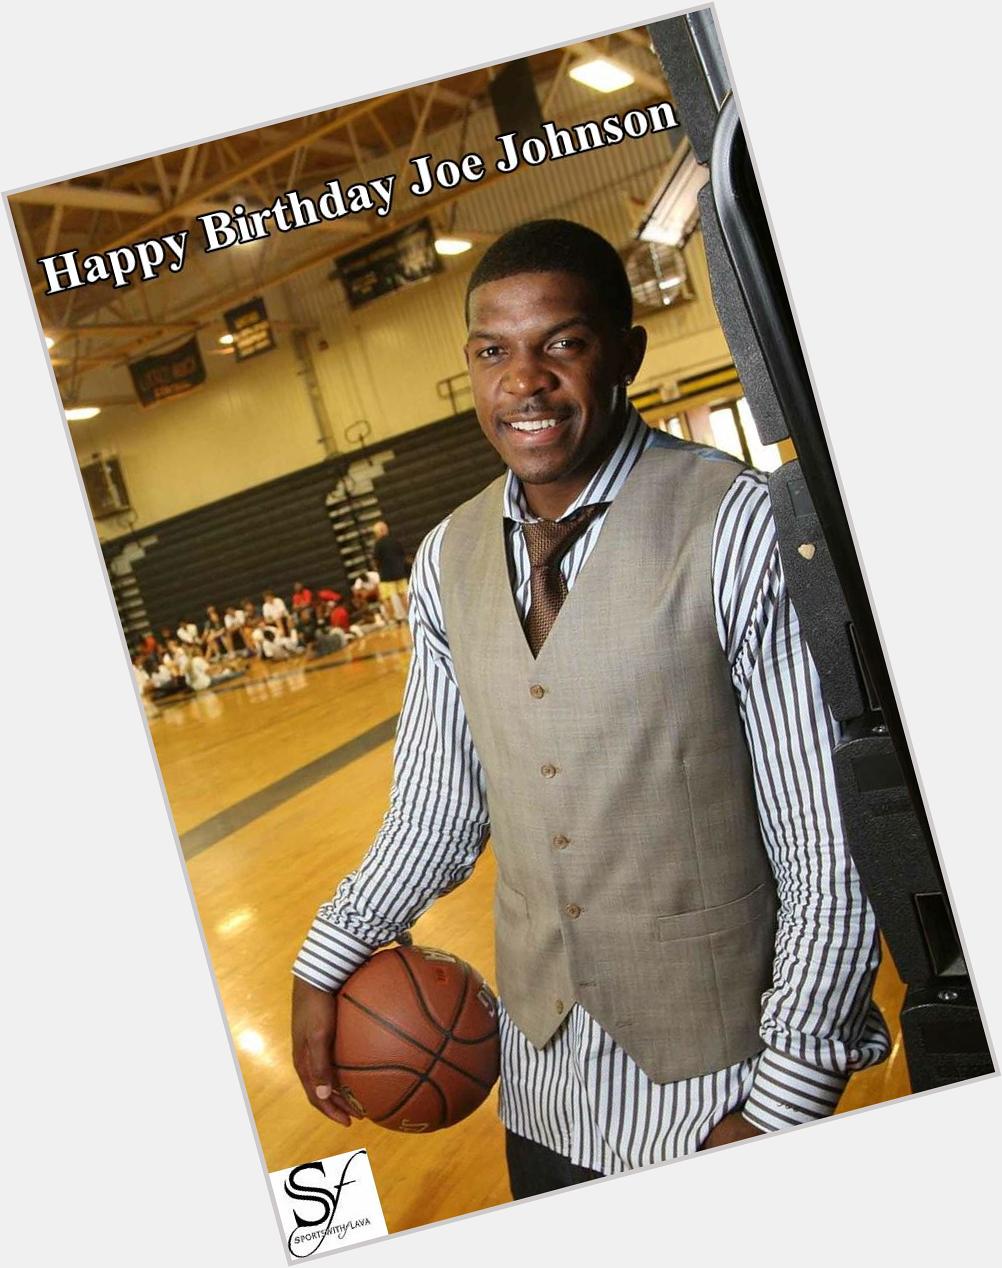 June 29th, SportsWithFlava would like to wish NBA Player Joe Johnson a Happy Birthday.  